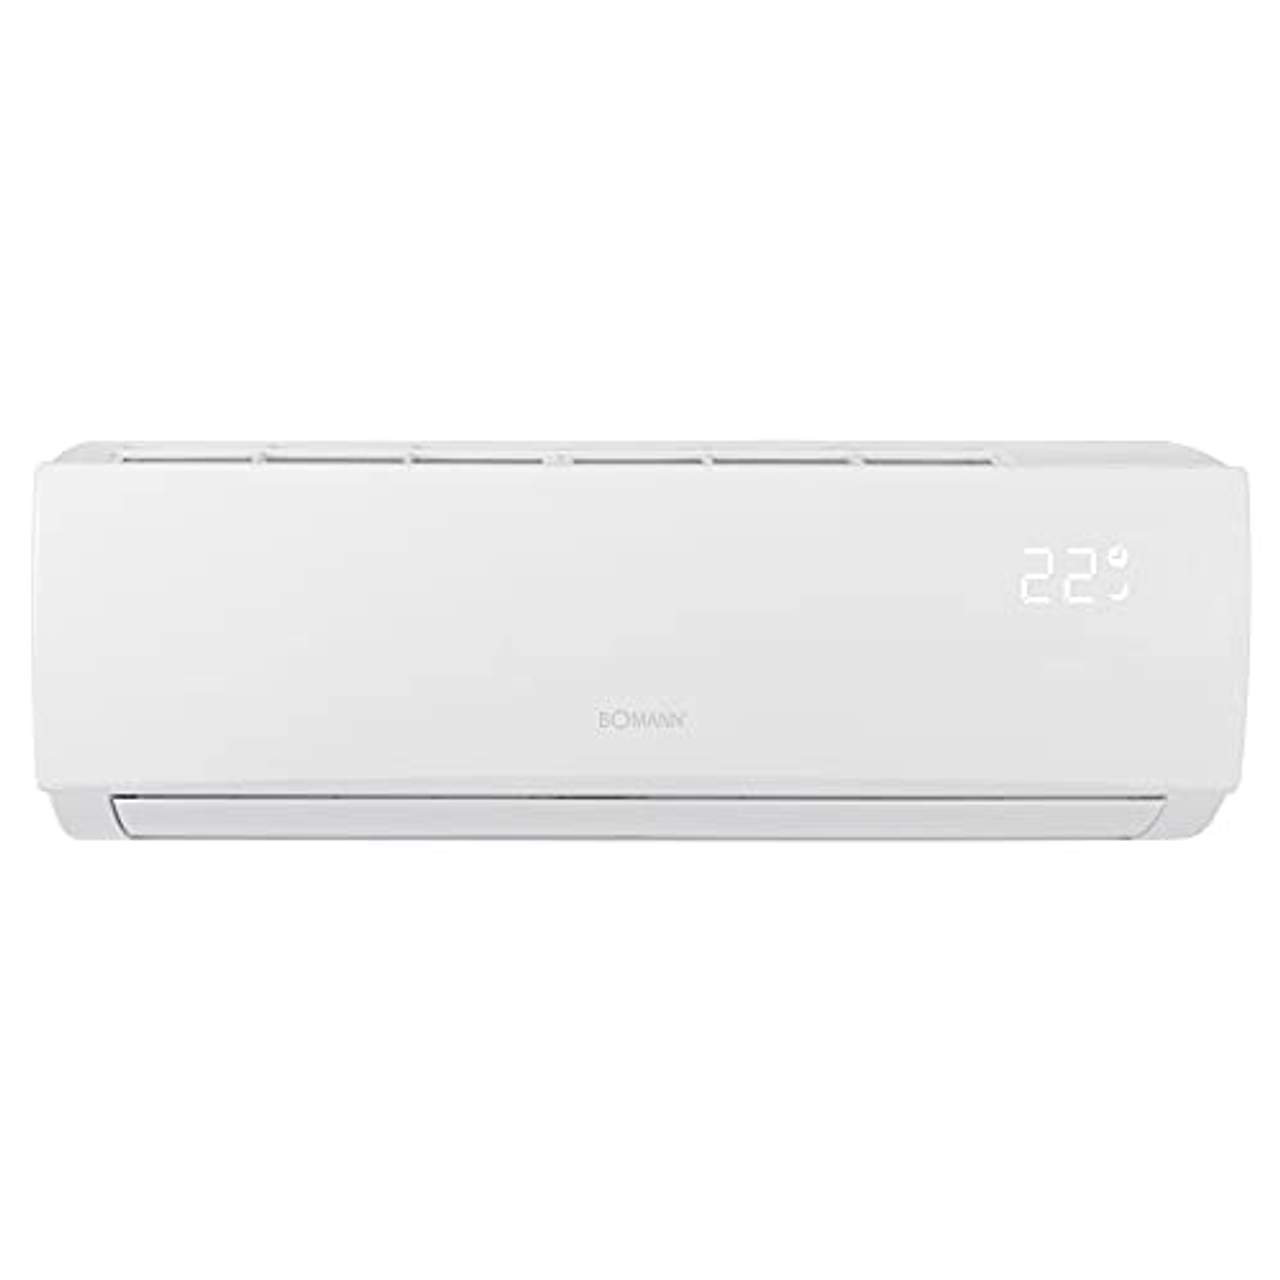 Bomann A++ WiFi-Klimaanlage CL 6045 QC CB